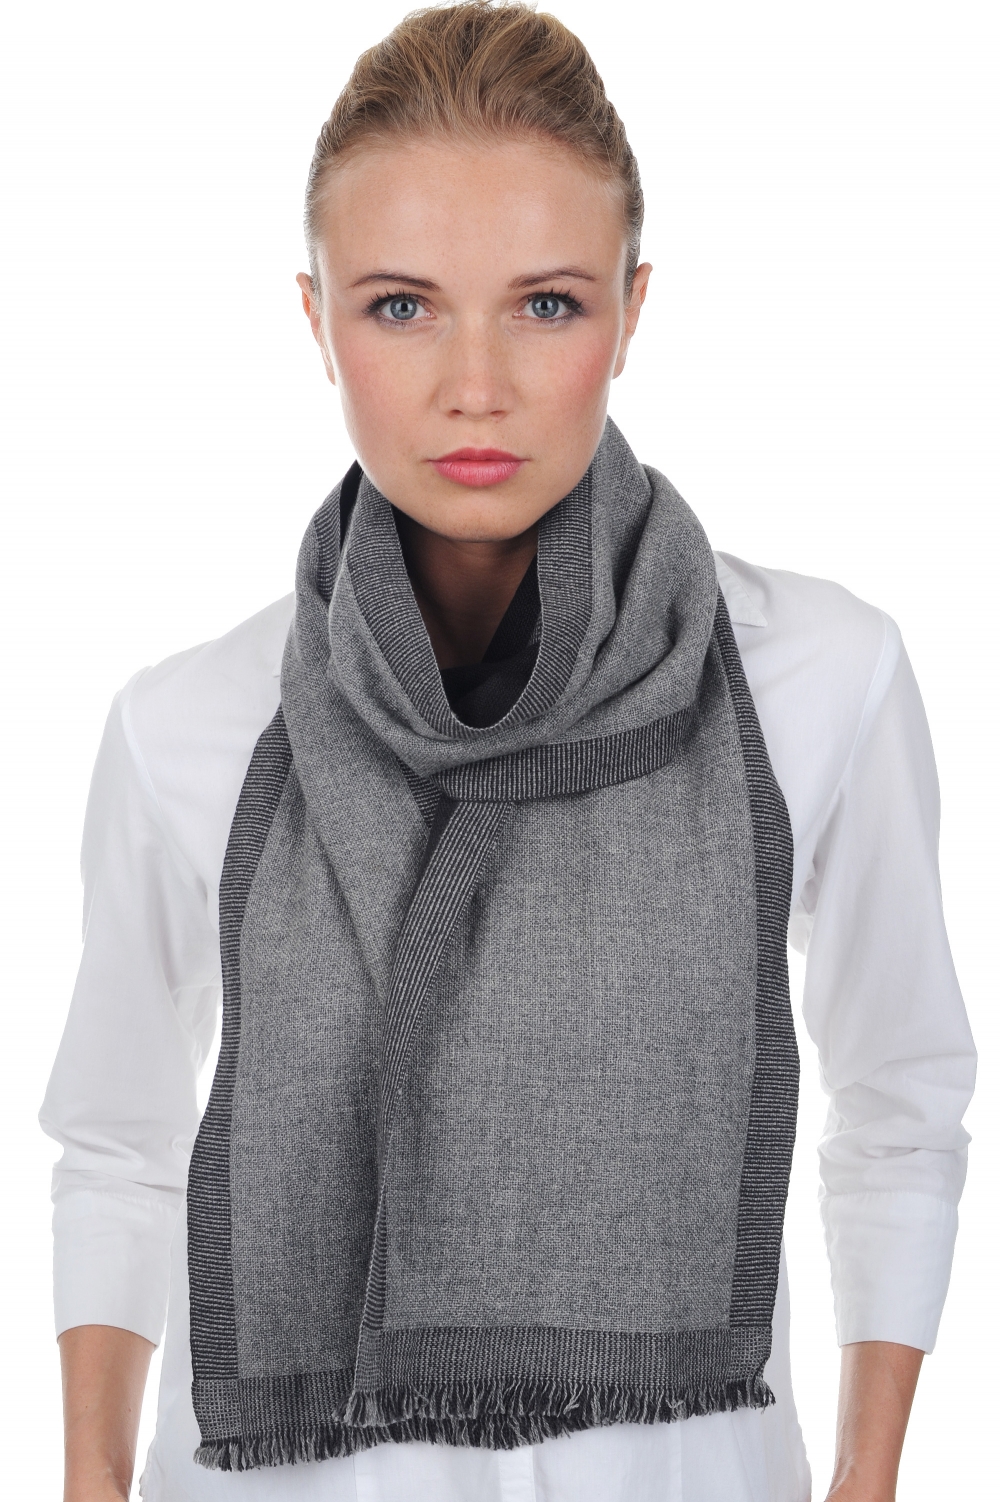 Cashmere accessories scarf mufflers tonnerre grey marl matt charcoal 180 x 24 cm